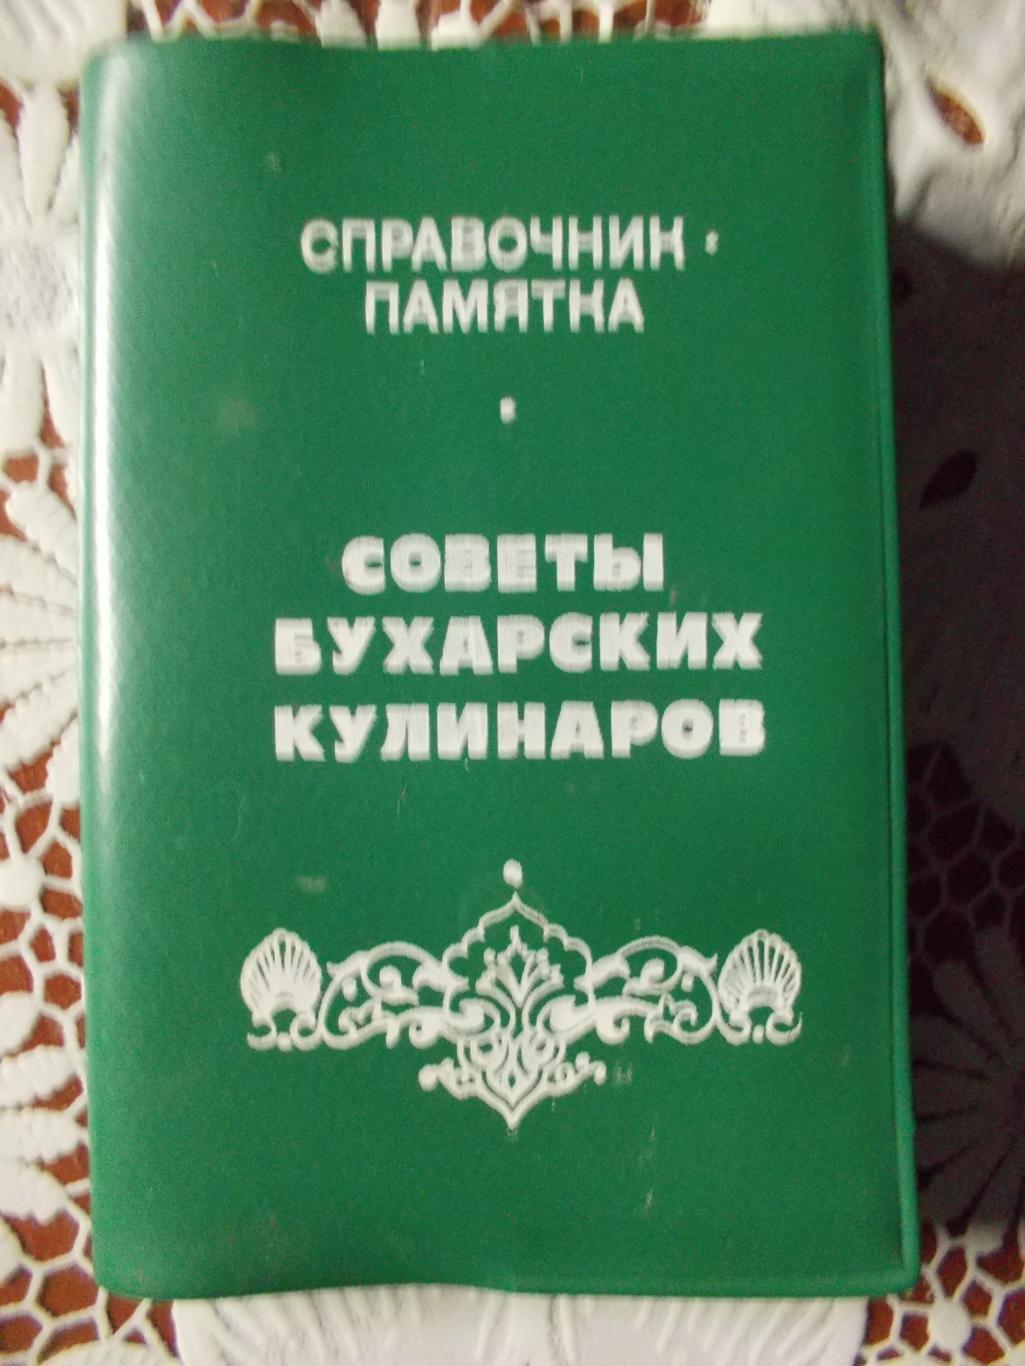 Календарь-книжка. Бухарская кулинария. 1990-91 гг.